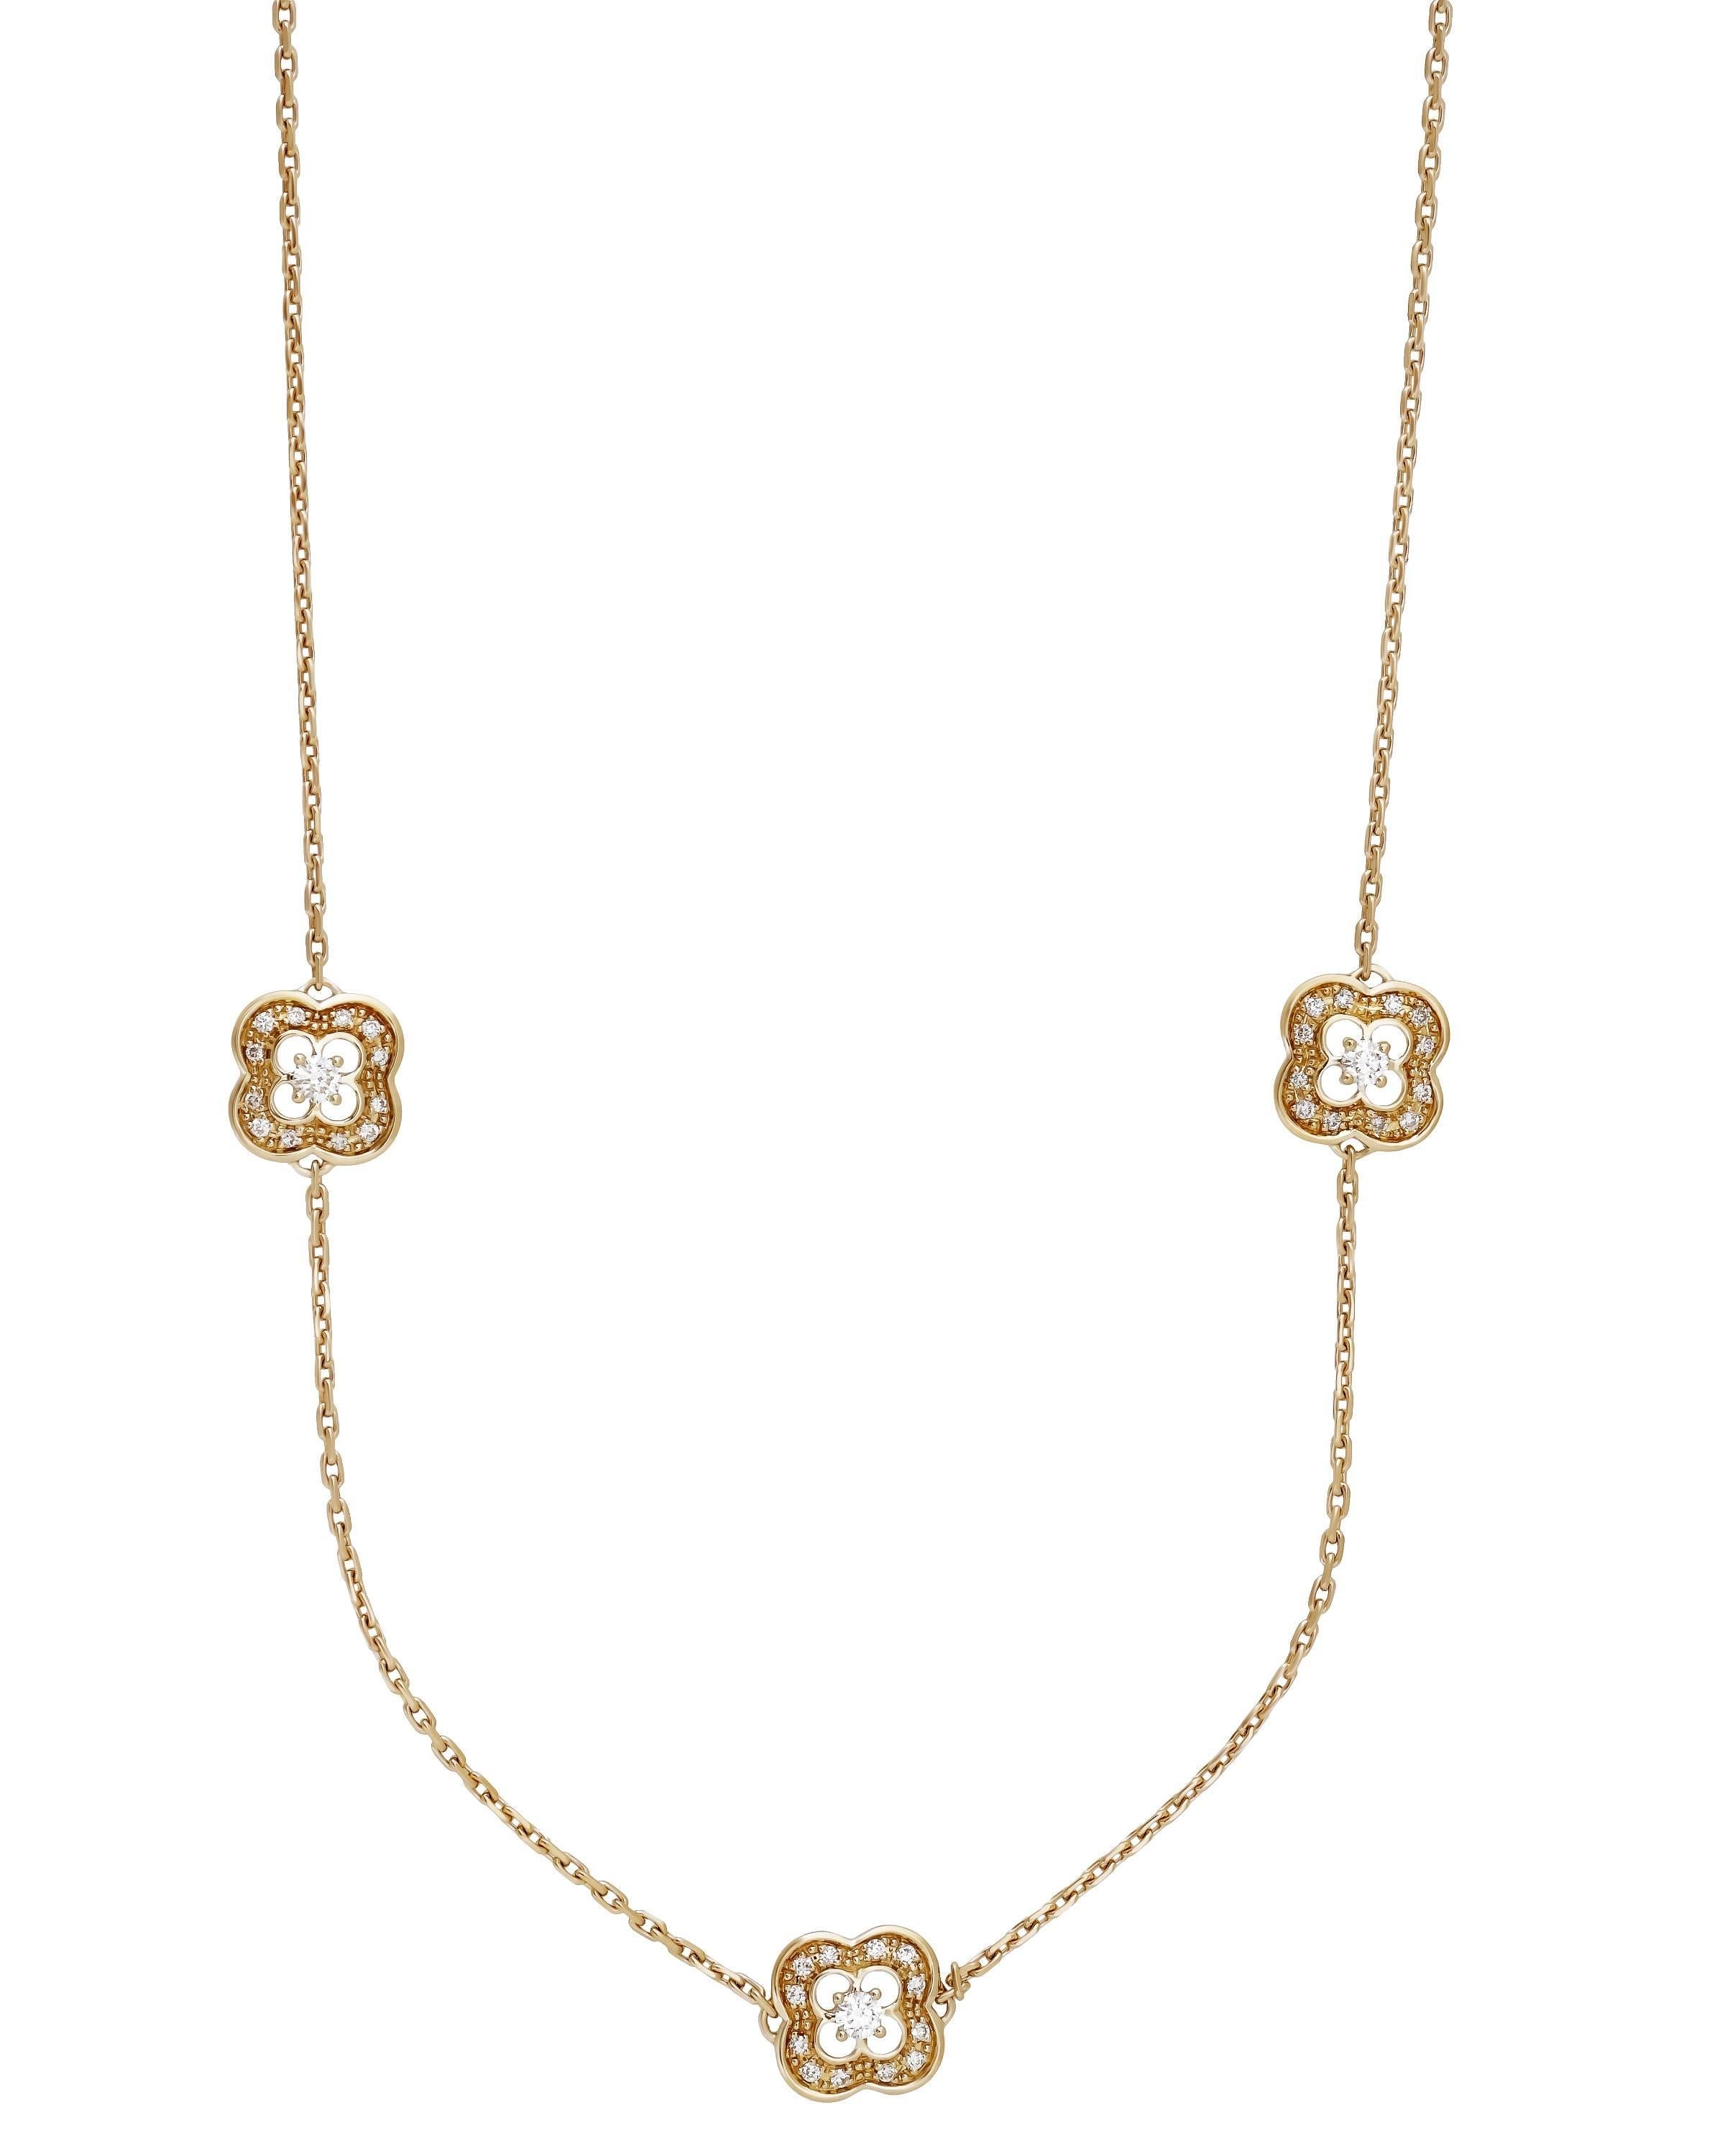 Mauboussin 18K Yellow Gold Diamond Floral Necklace Length: 36.5